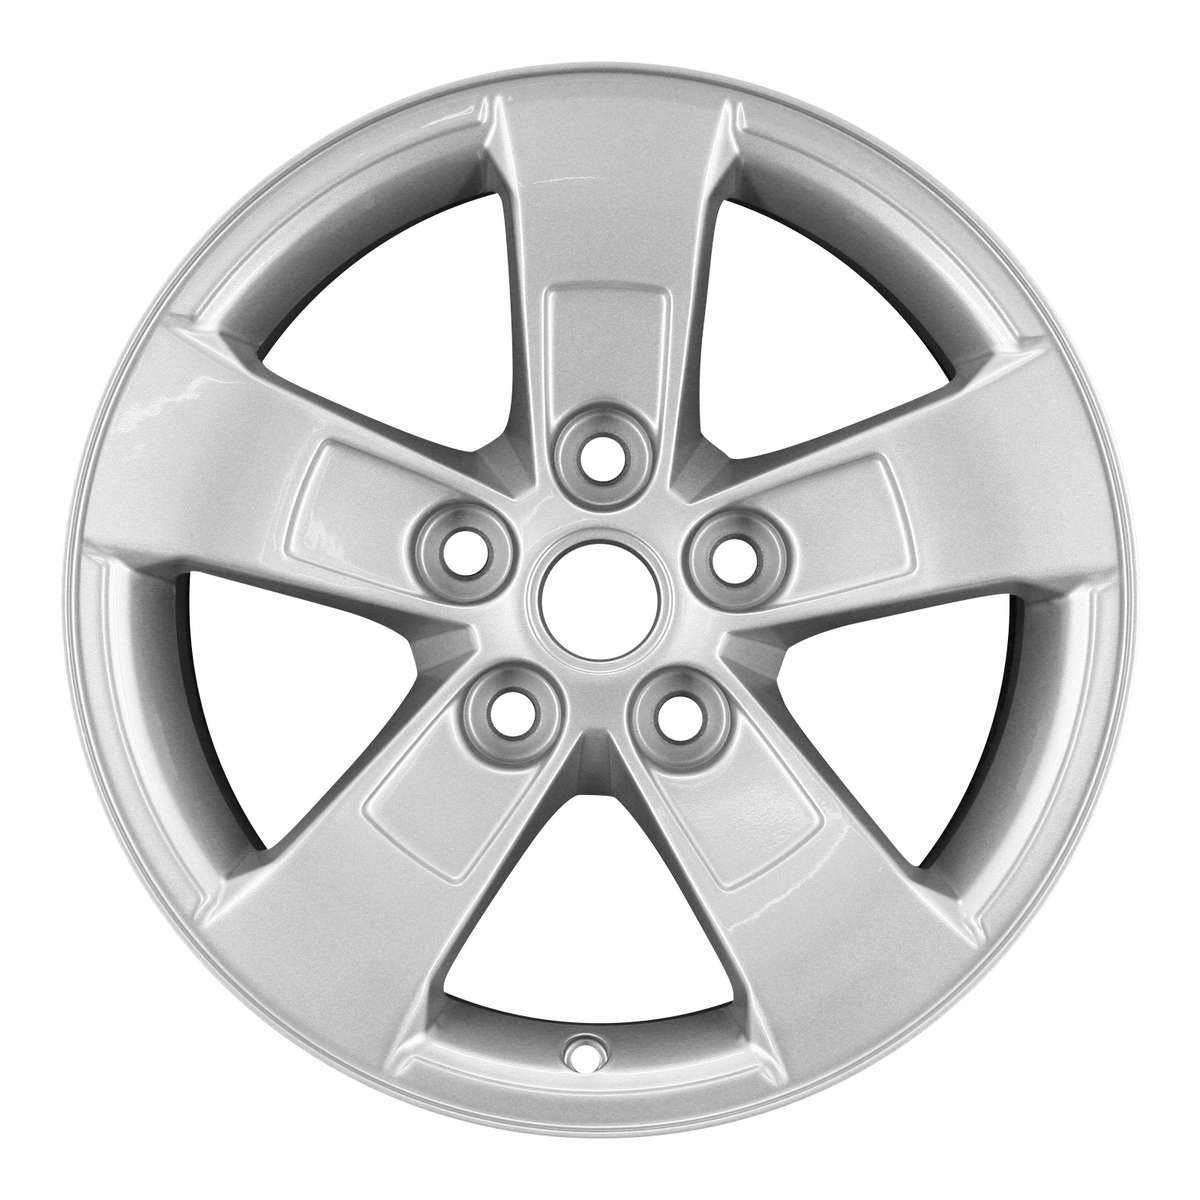 2014 Chevrolet Malibu New 16" Replacement Wheel Rim RW5558S